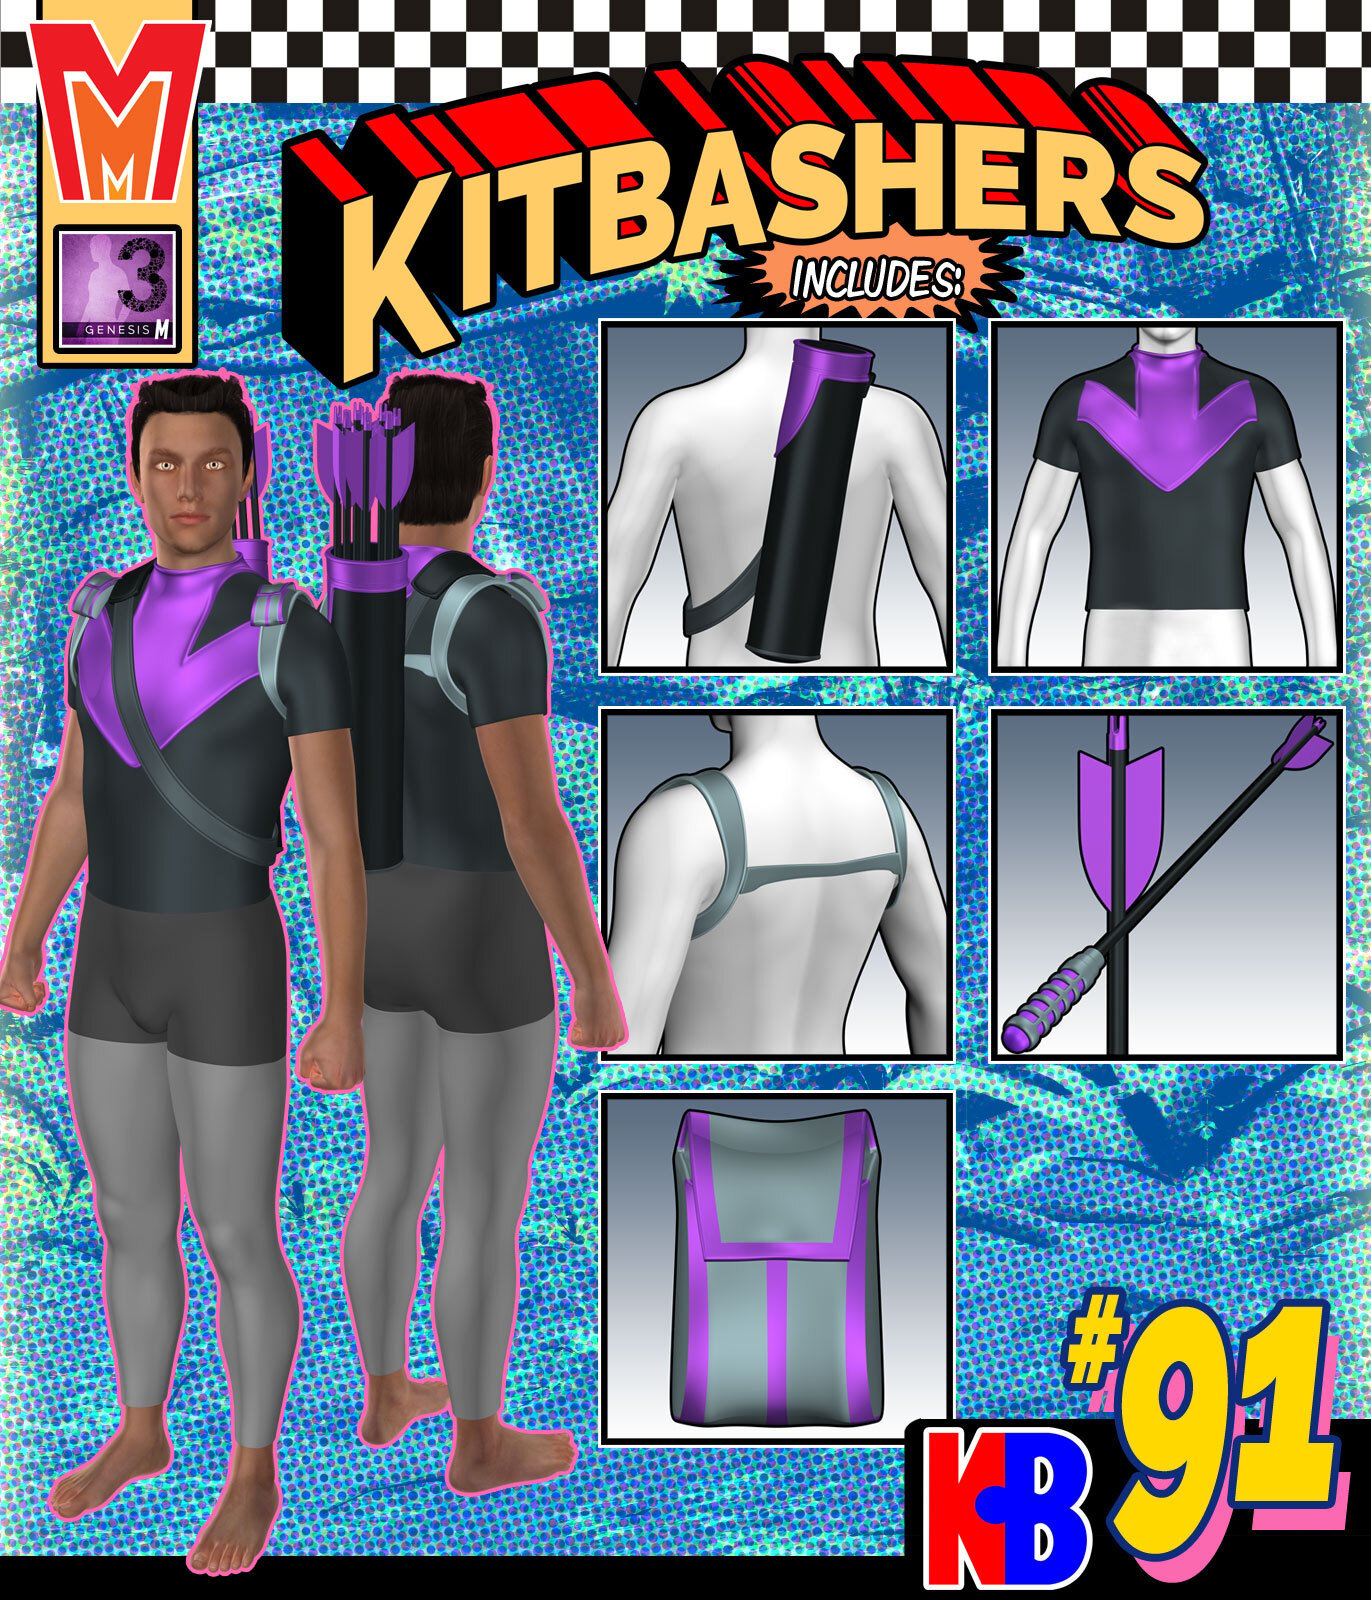 Kitbashers 091 MMG3M by: MightyMite, 3D Models by Daz 3D